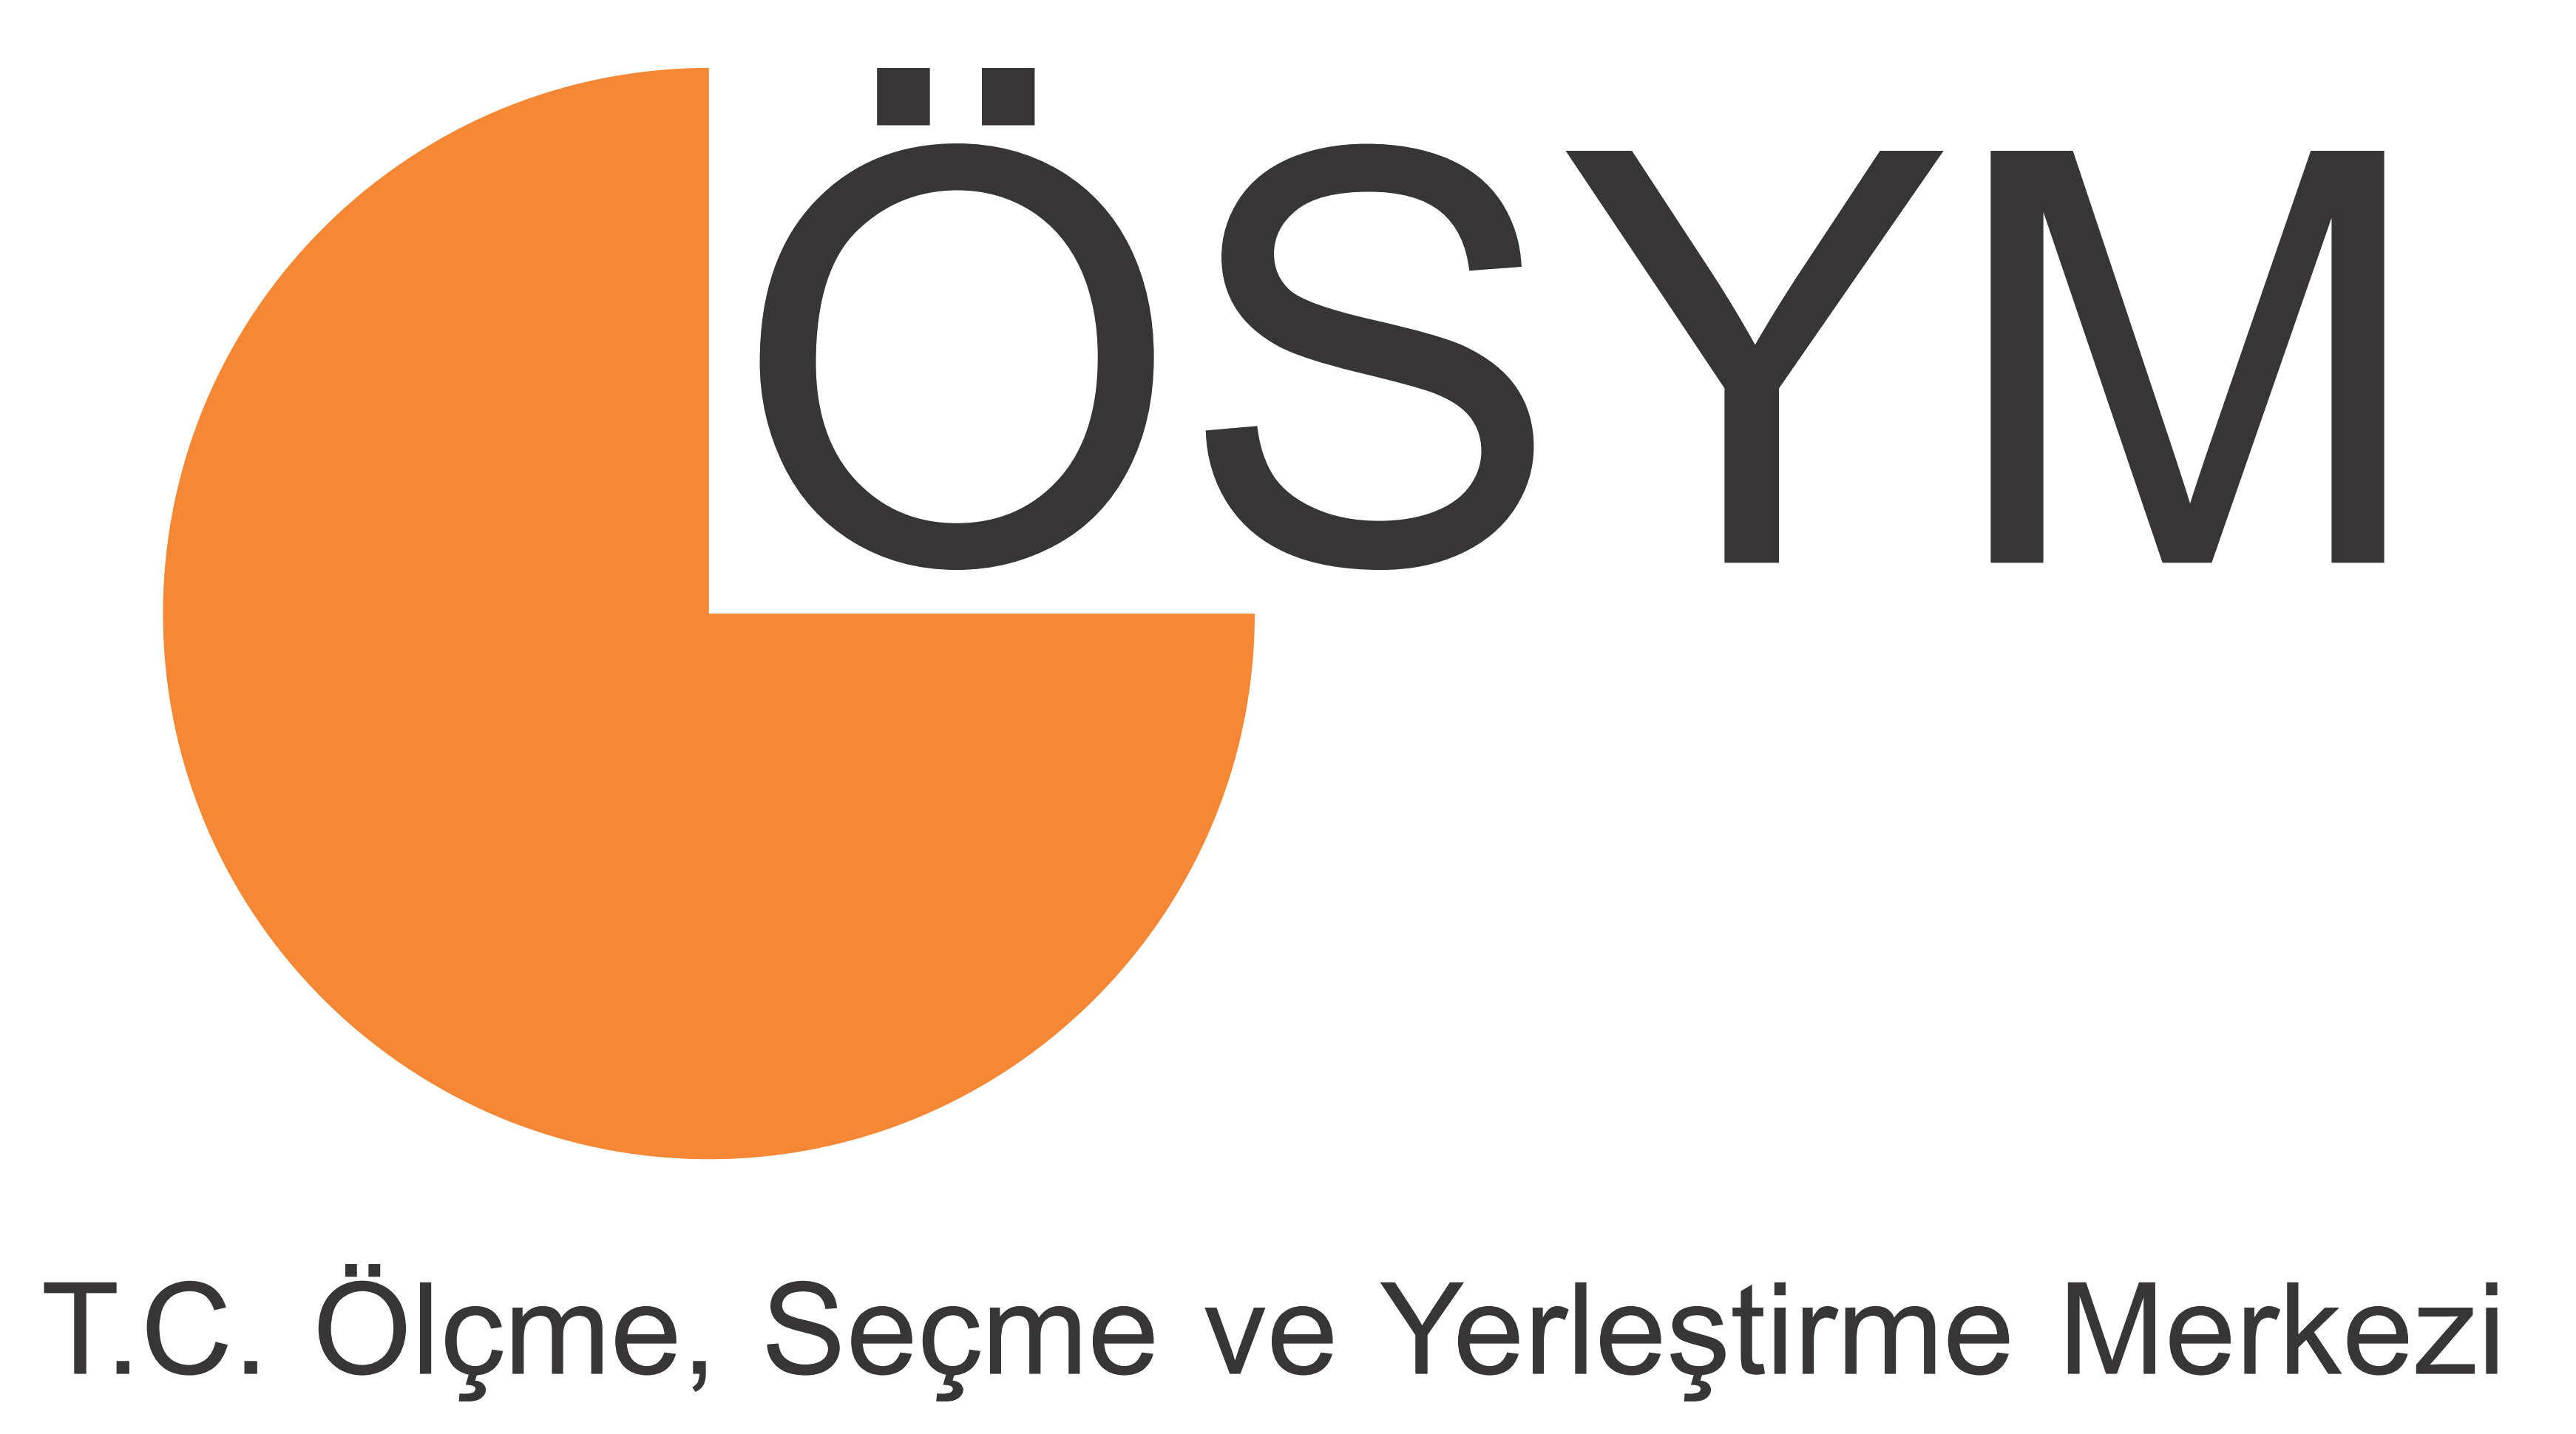 ÖSYM Logo [osym.gov.tr] png